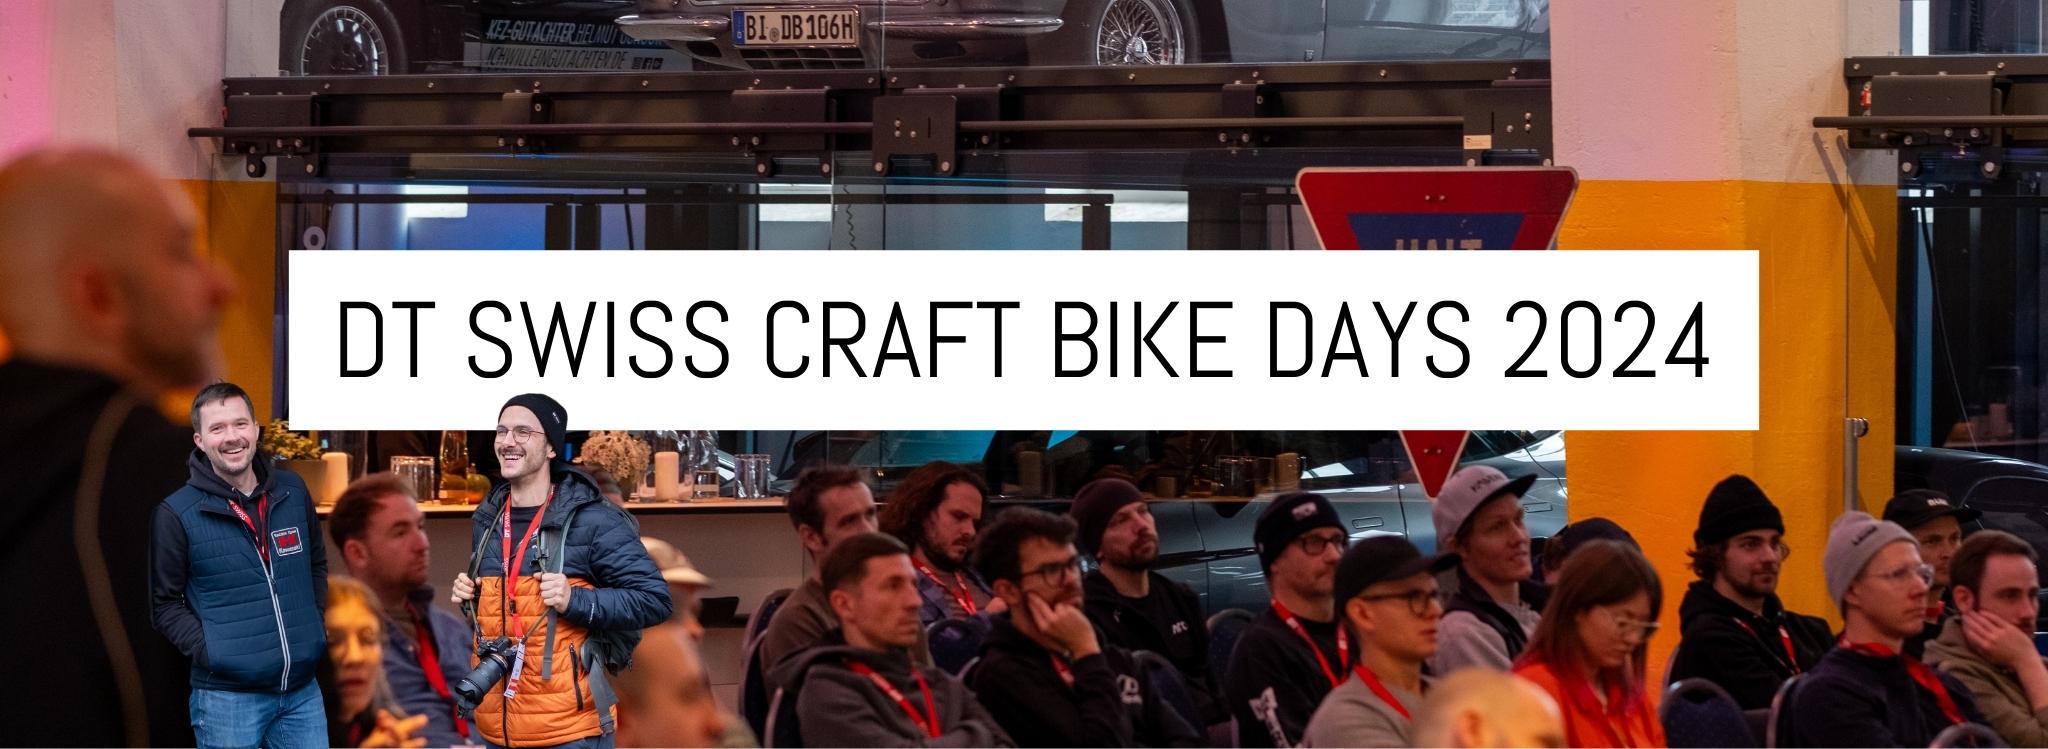 DT Swiss Craft Bike Days